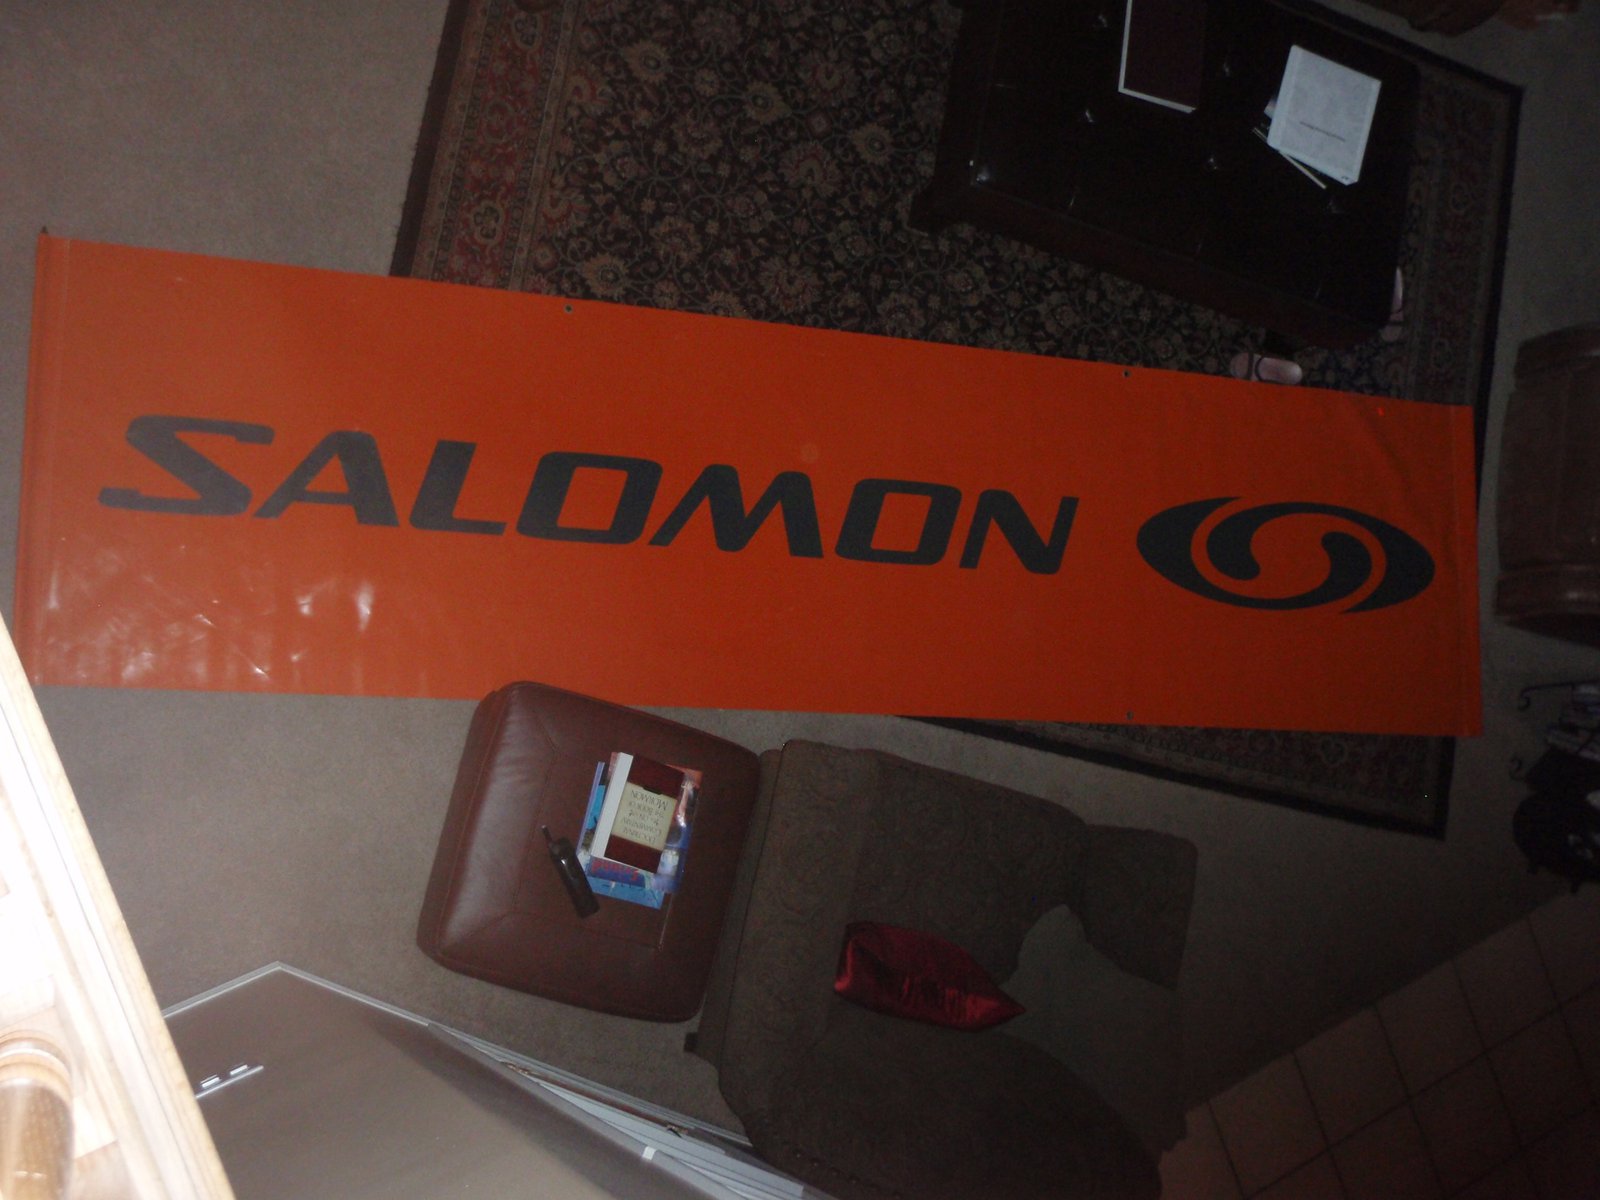 Huge salomon banner